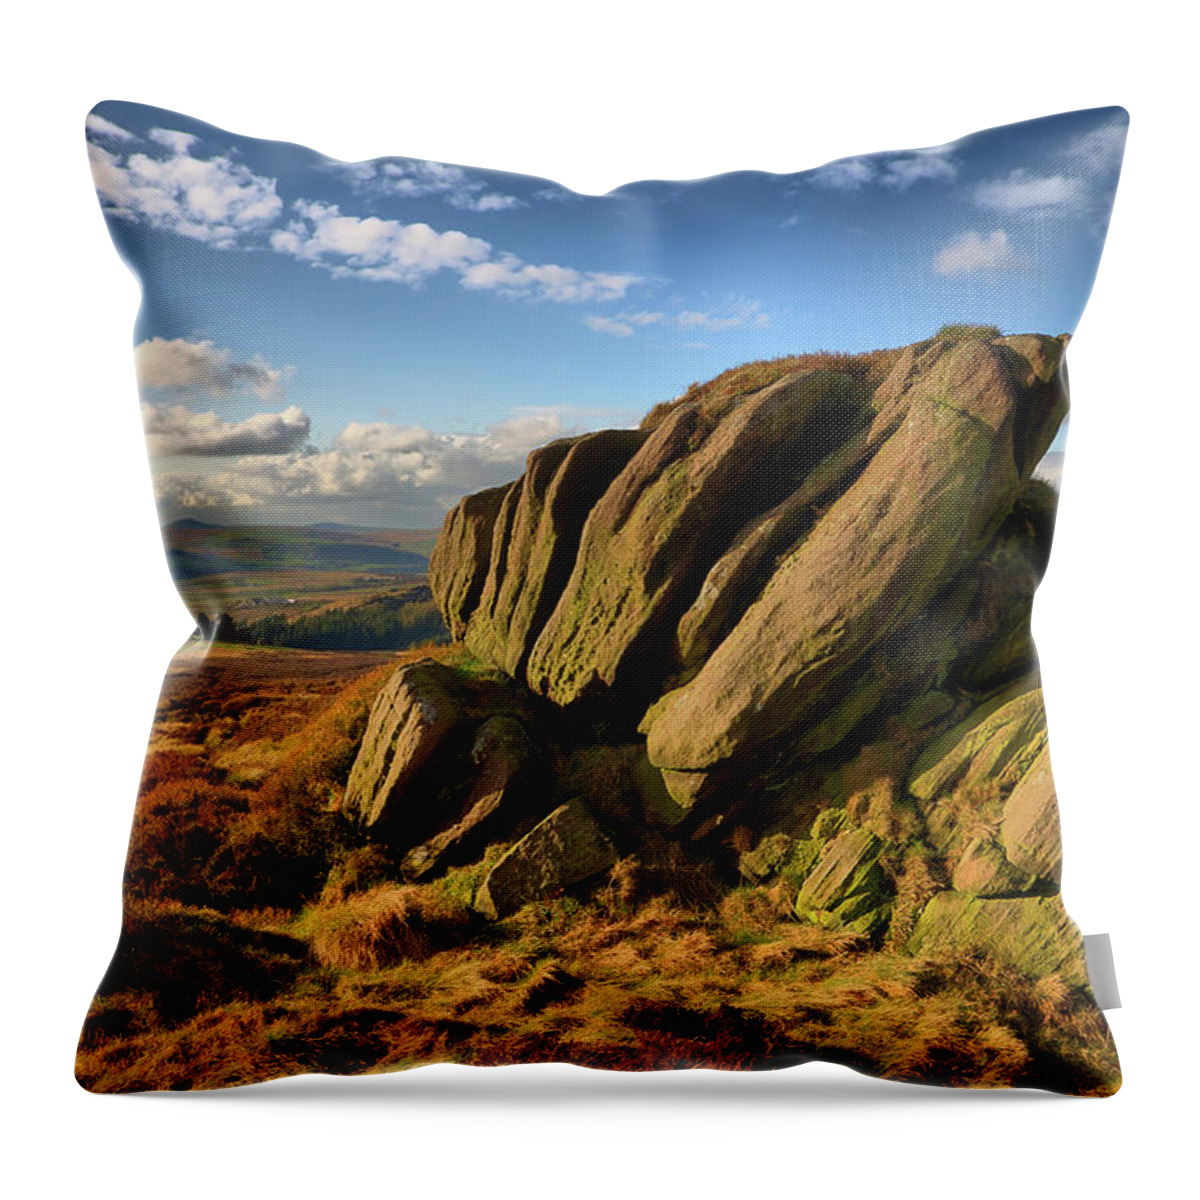 Grass Throw Pillow featuring the photograph Ramshaw Rocks Ridge by James Ennis